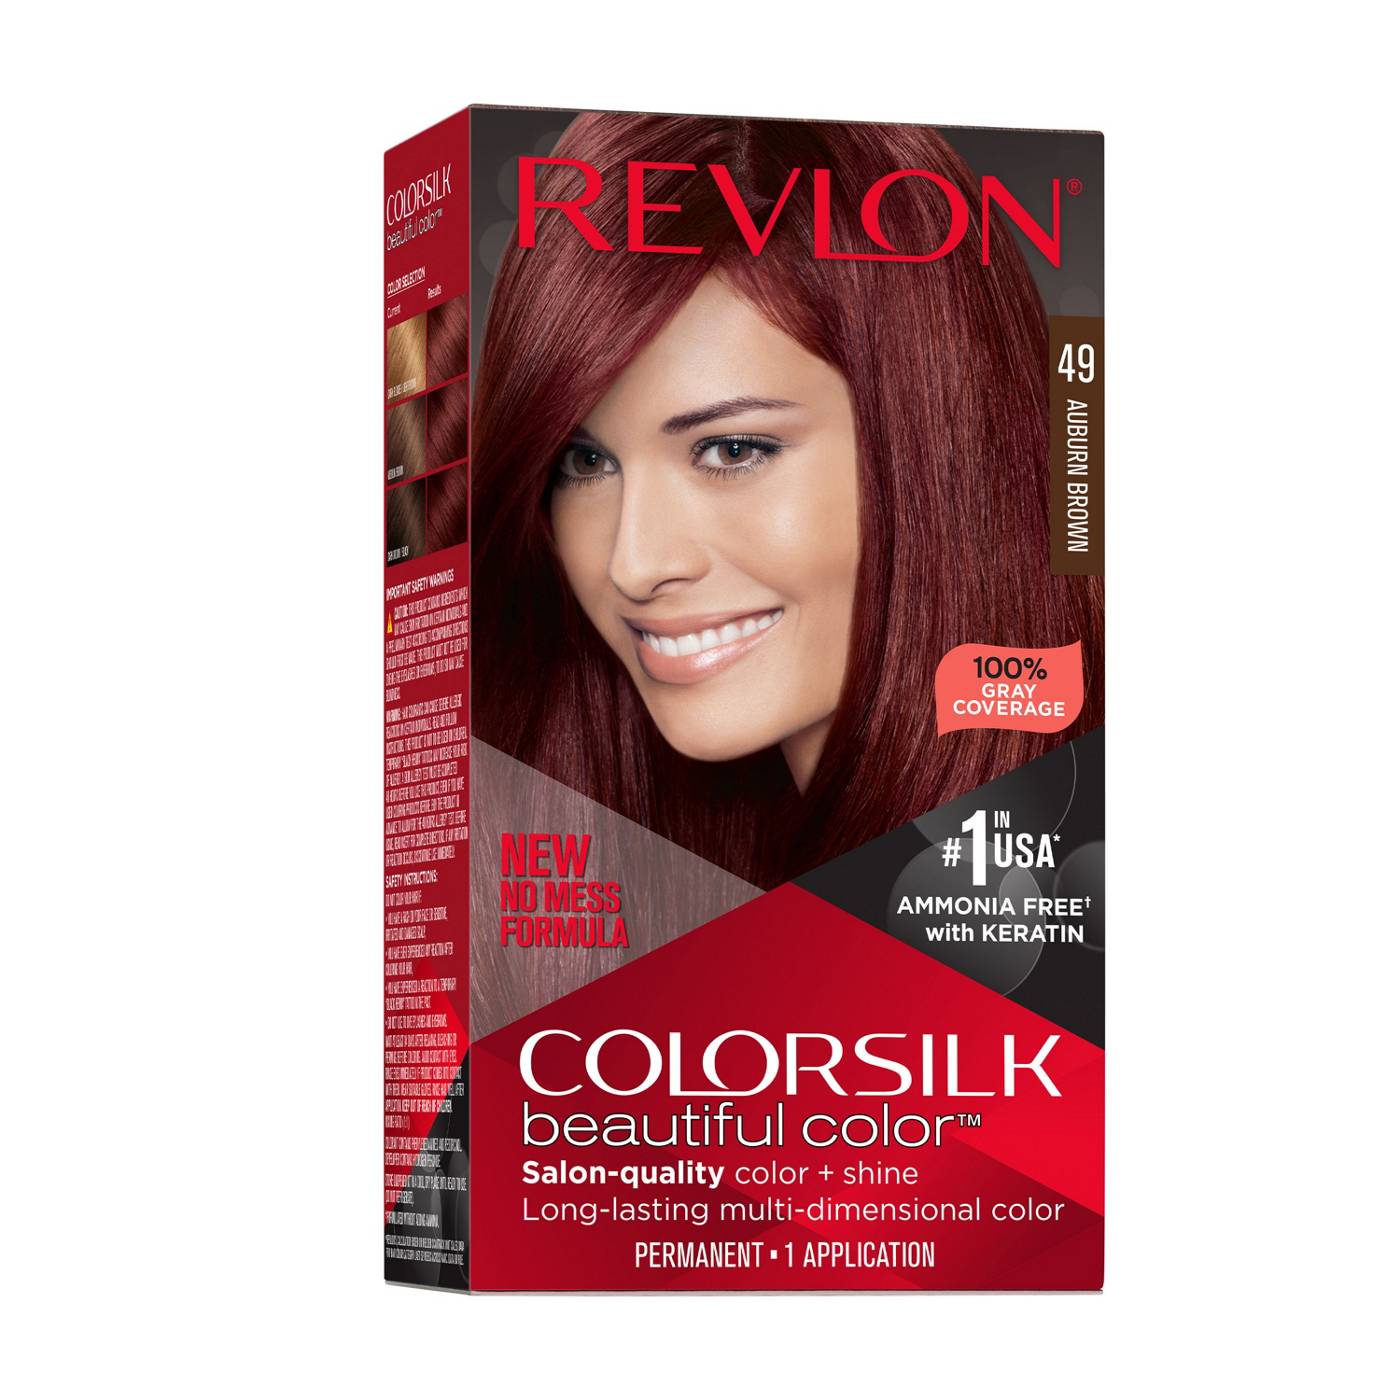 Revlon ColorSilk Hair Color - 49 Auburn Brown; image 1 of 7